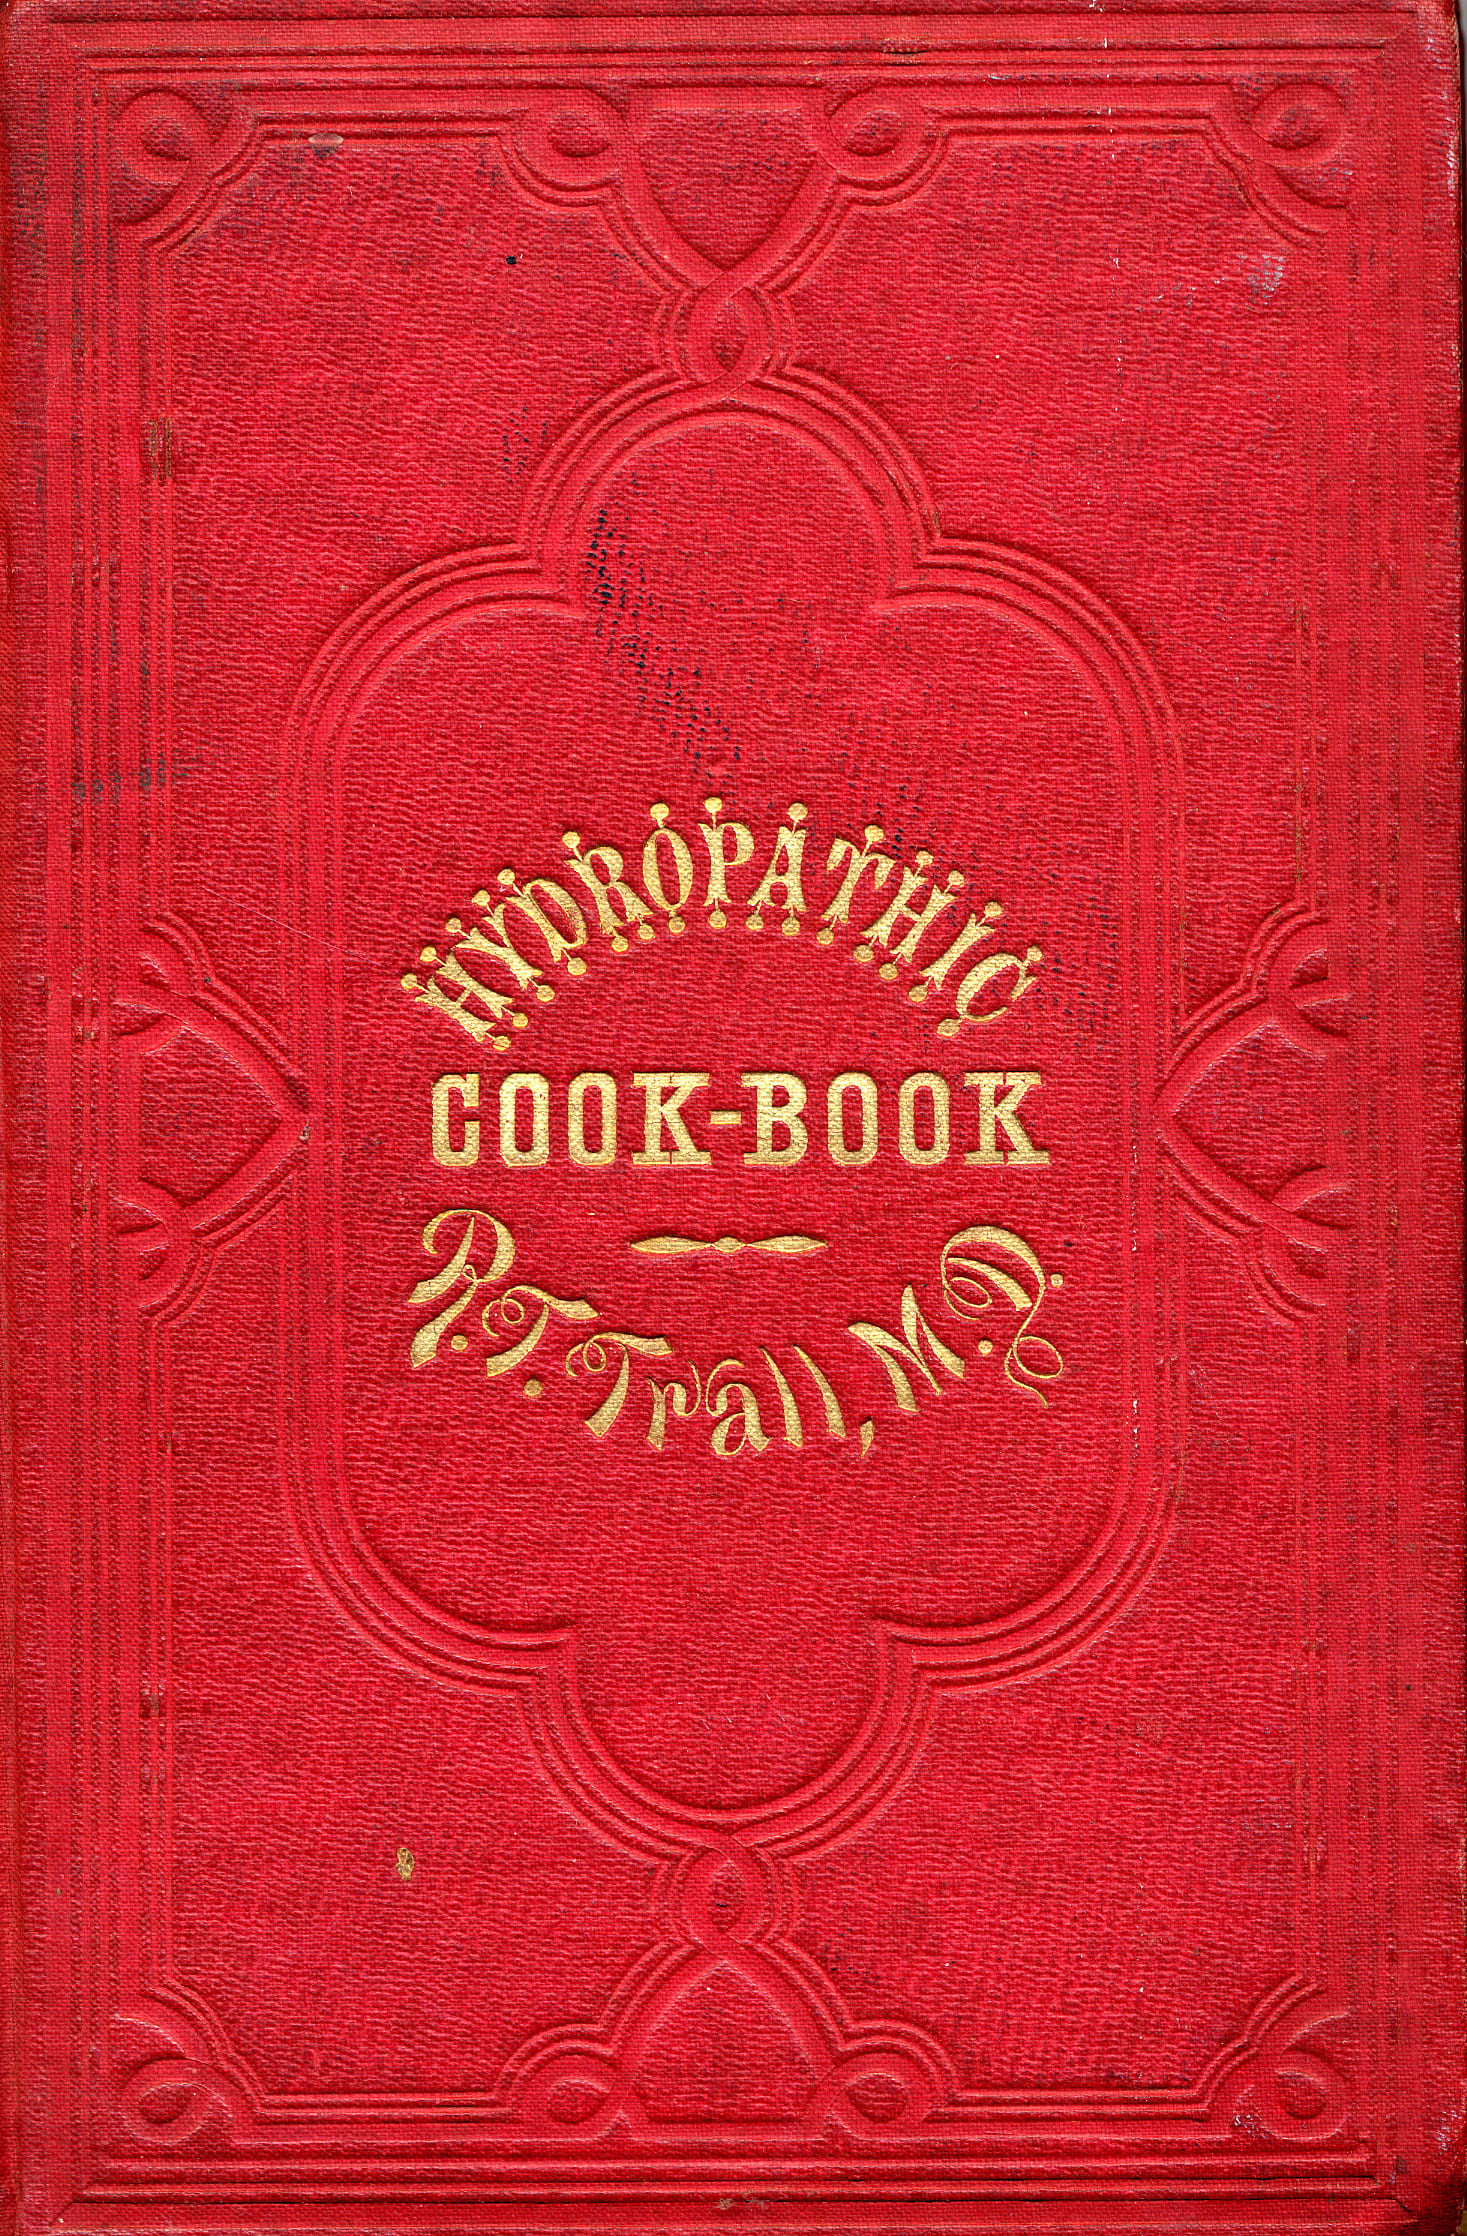 hydropathic cookbook